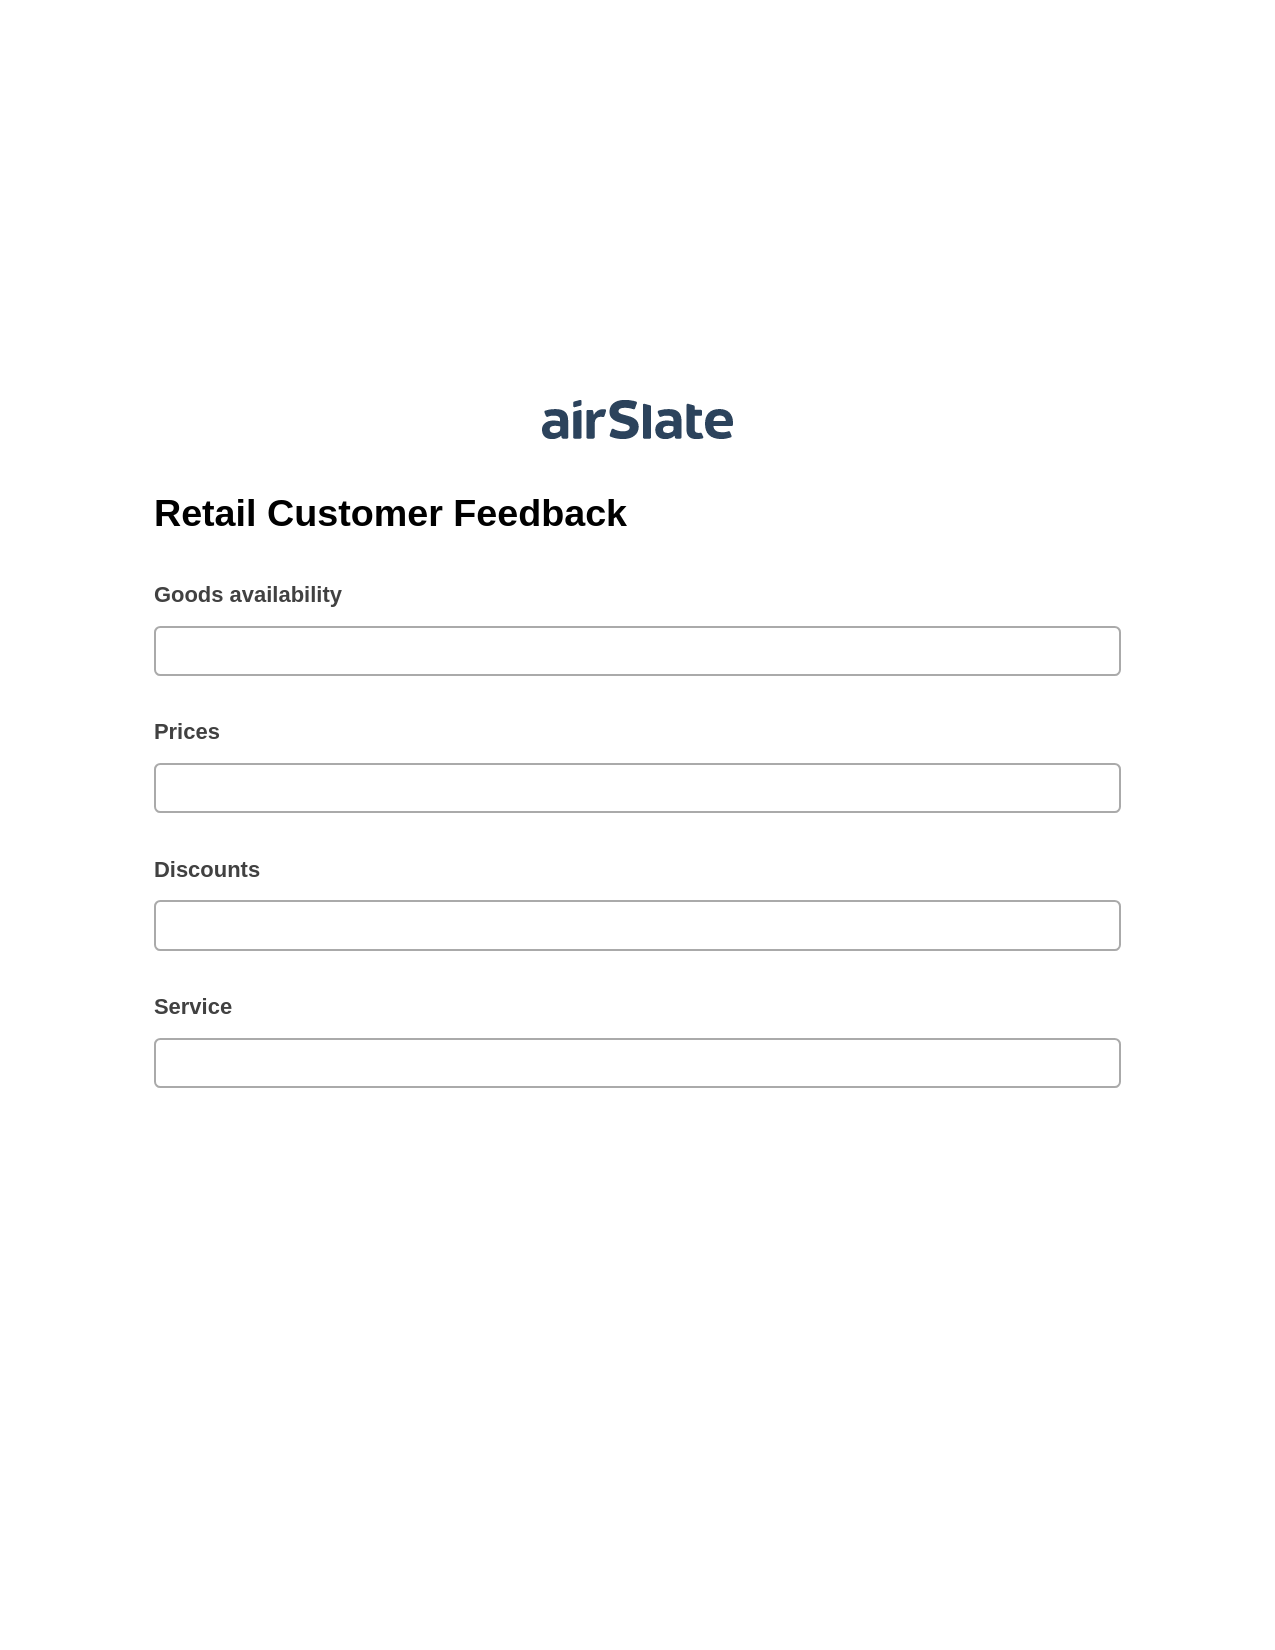 Multirole Retail Customer Feedback Pre-fill from Google Sheets Bot, Email Notification Bot, Box Bot